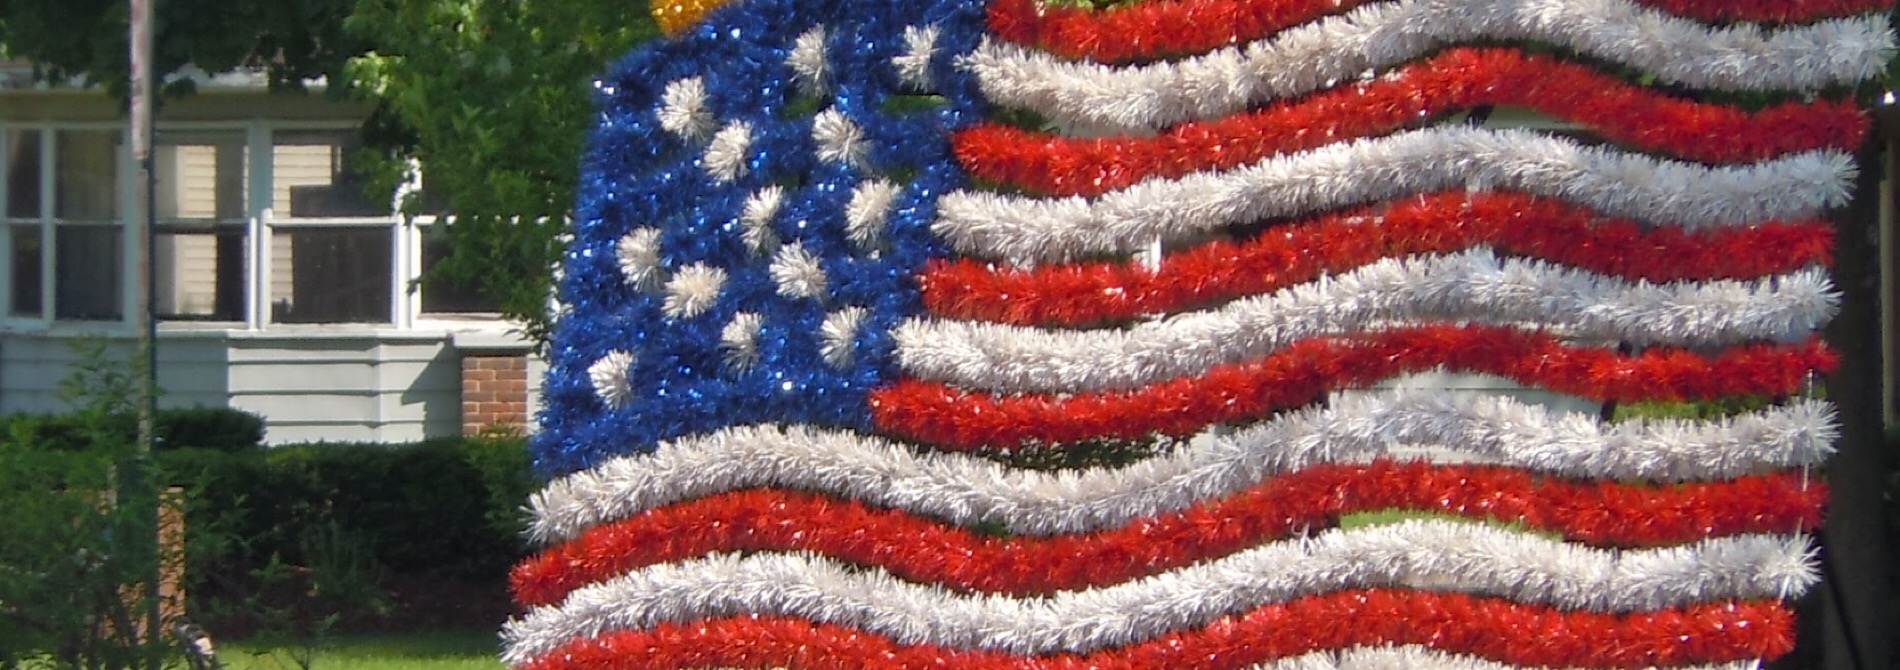 American flag art in park